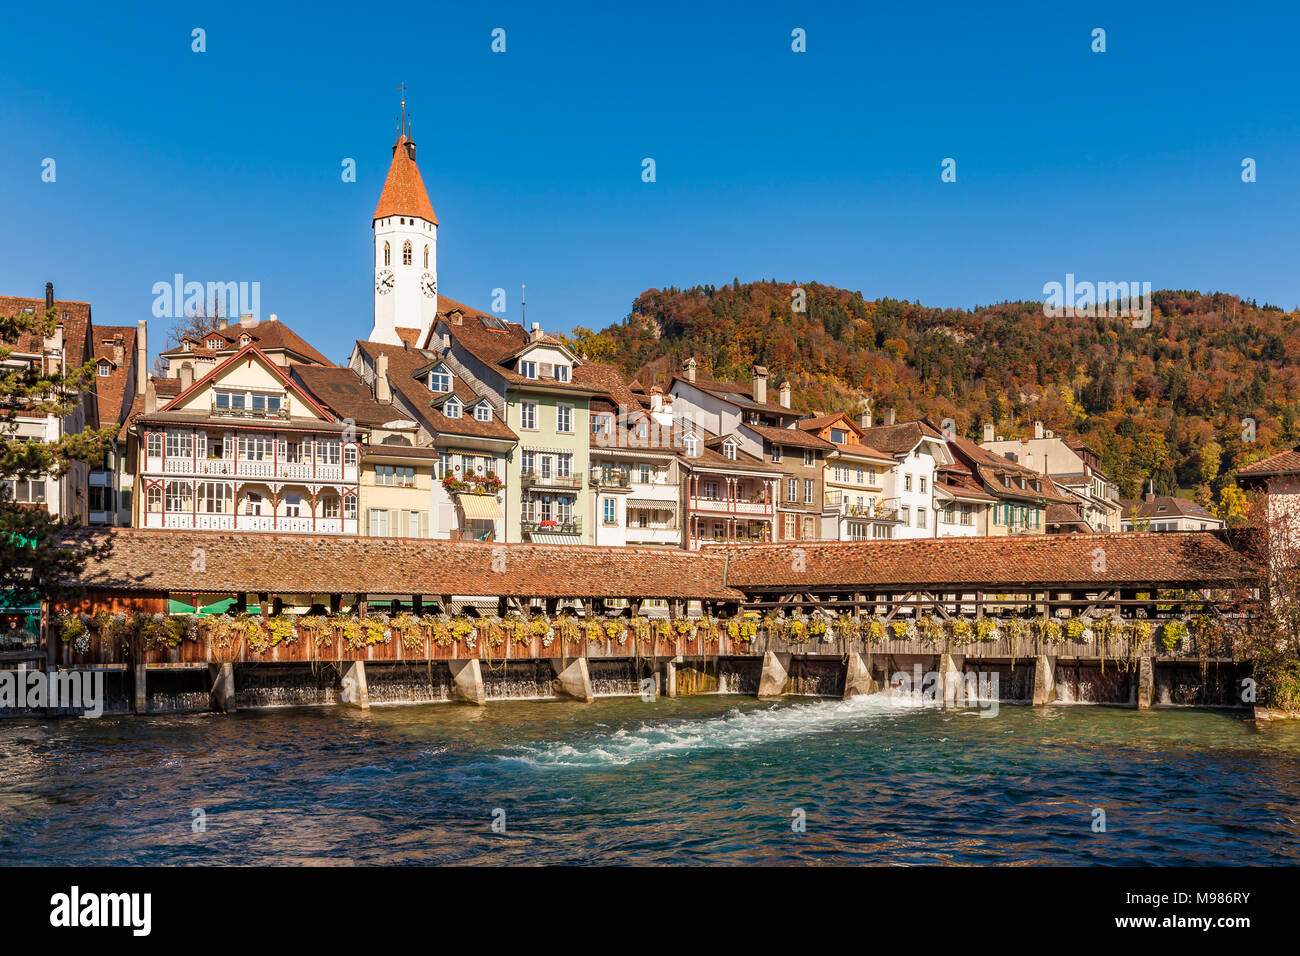 Schweiz, Kanton Bern, Berner Oberland, Thun, Fluss Aare, Altstadt, Stadtkirche, Untere Schleuse, Schleusenbrücke, überdachte Brücke Foto Stock